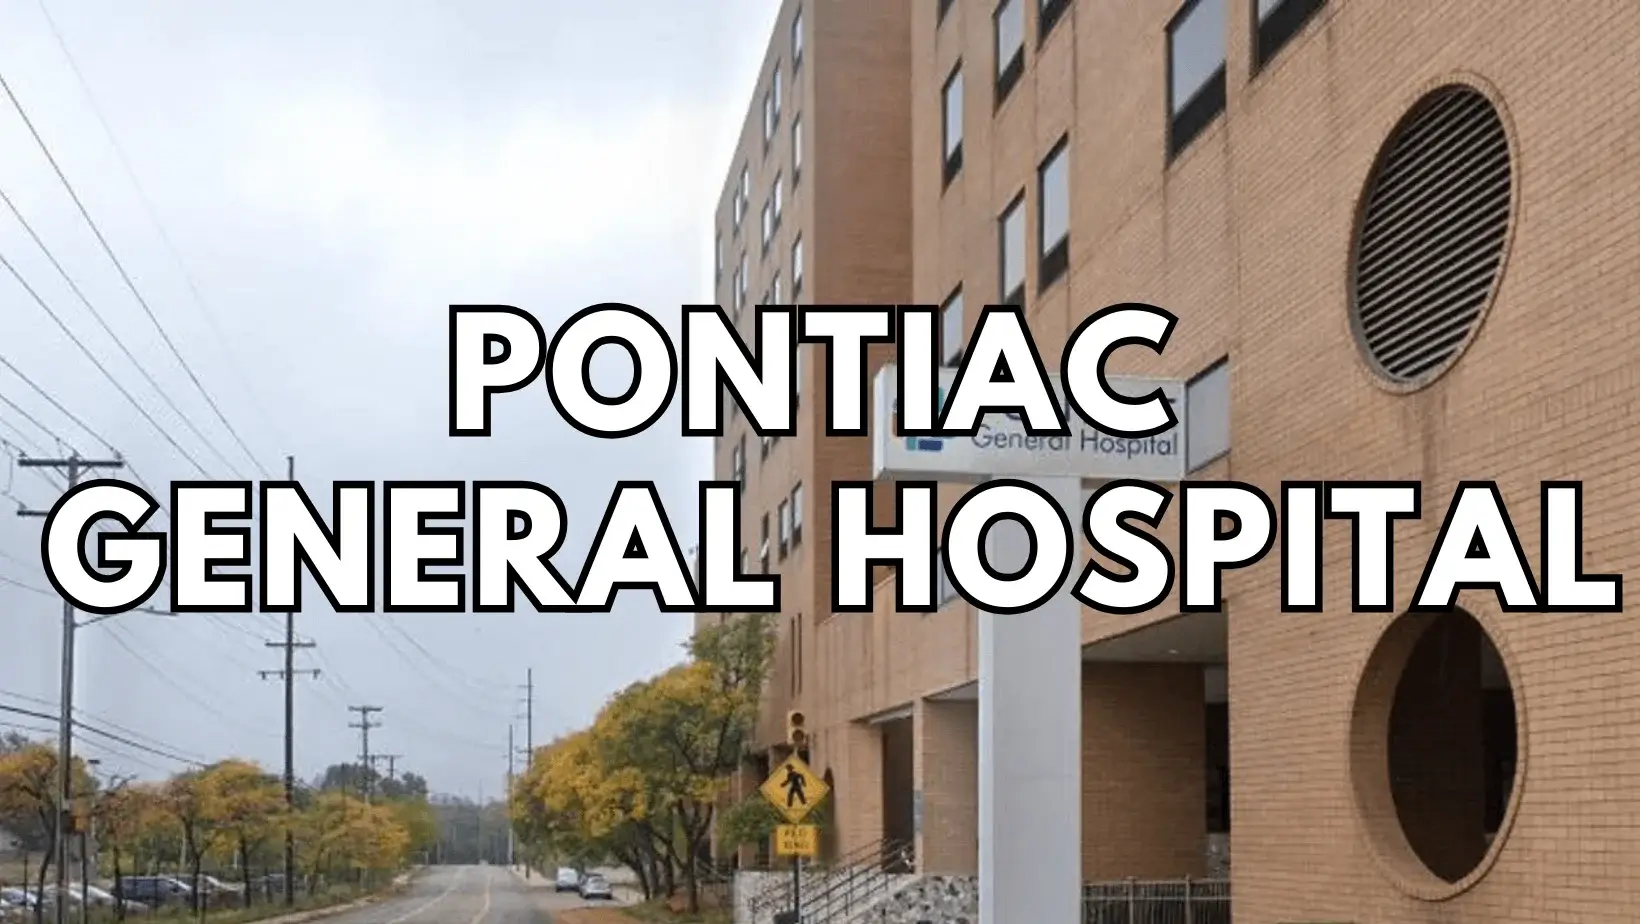 Pontiac General Hospital featured image